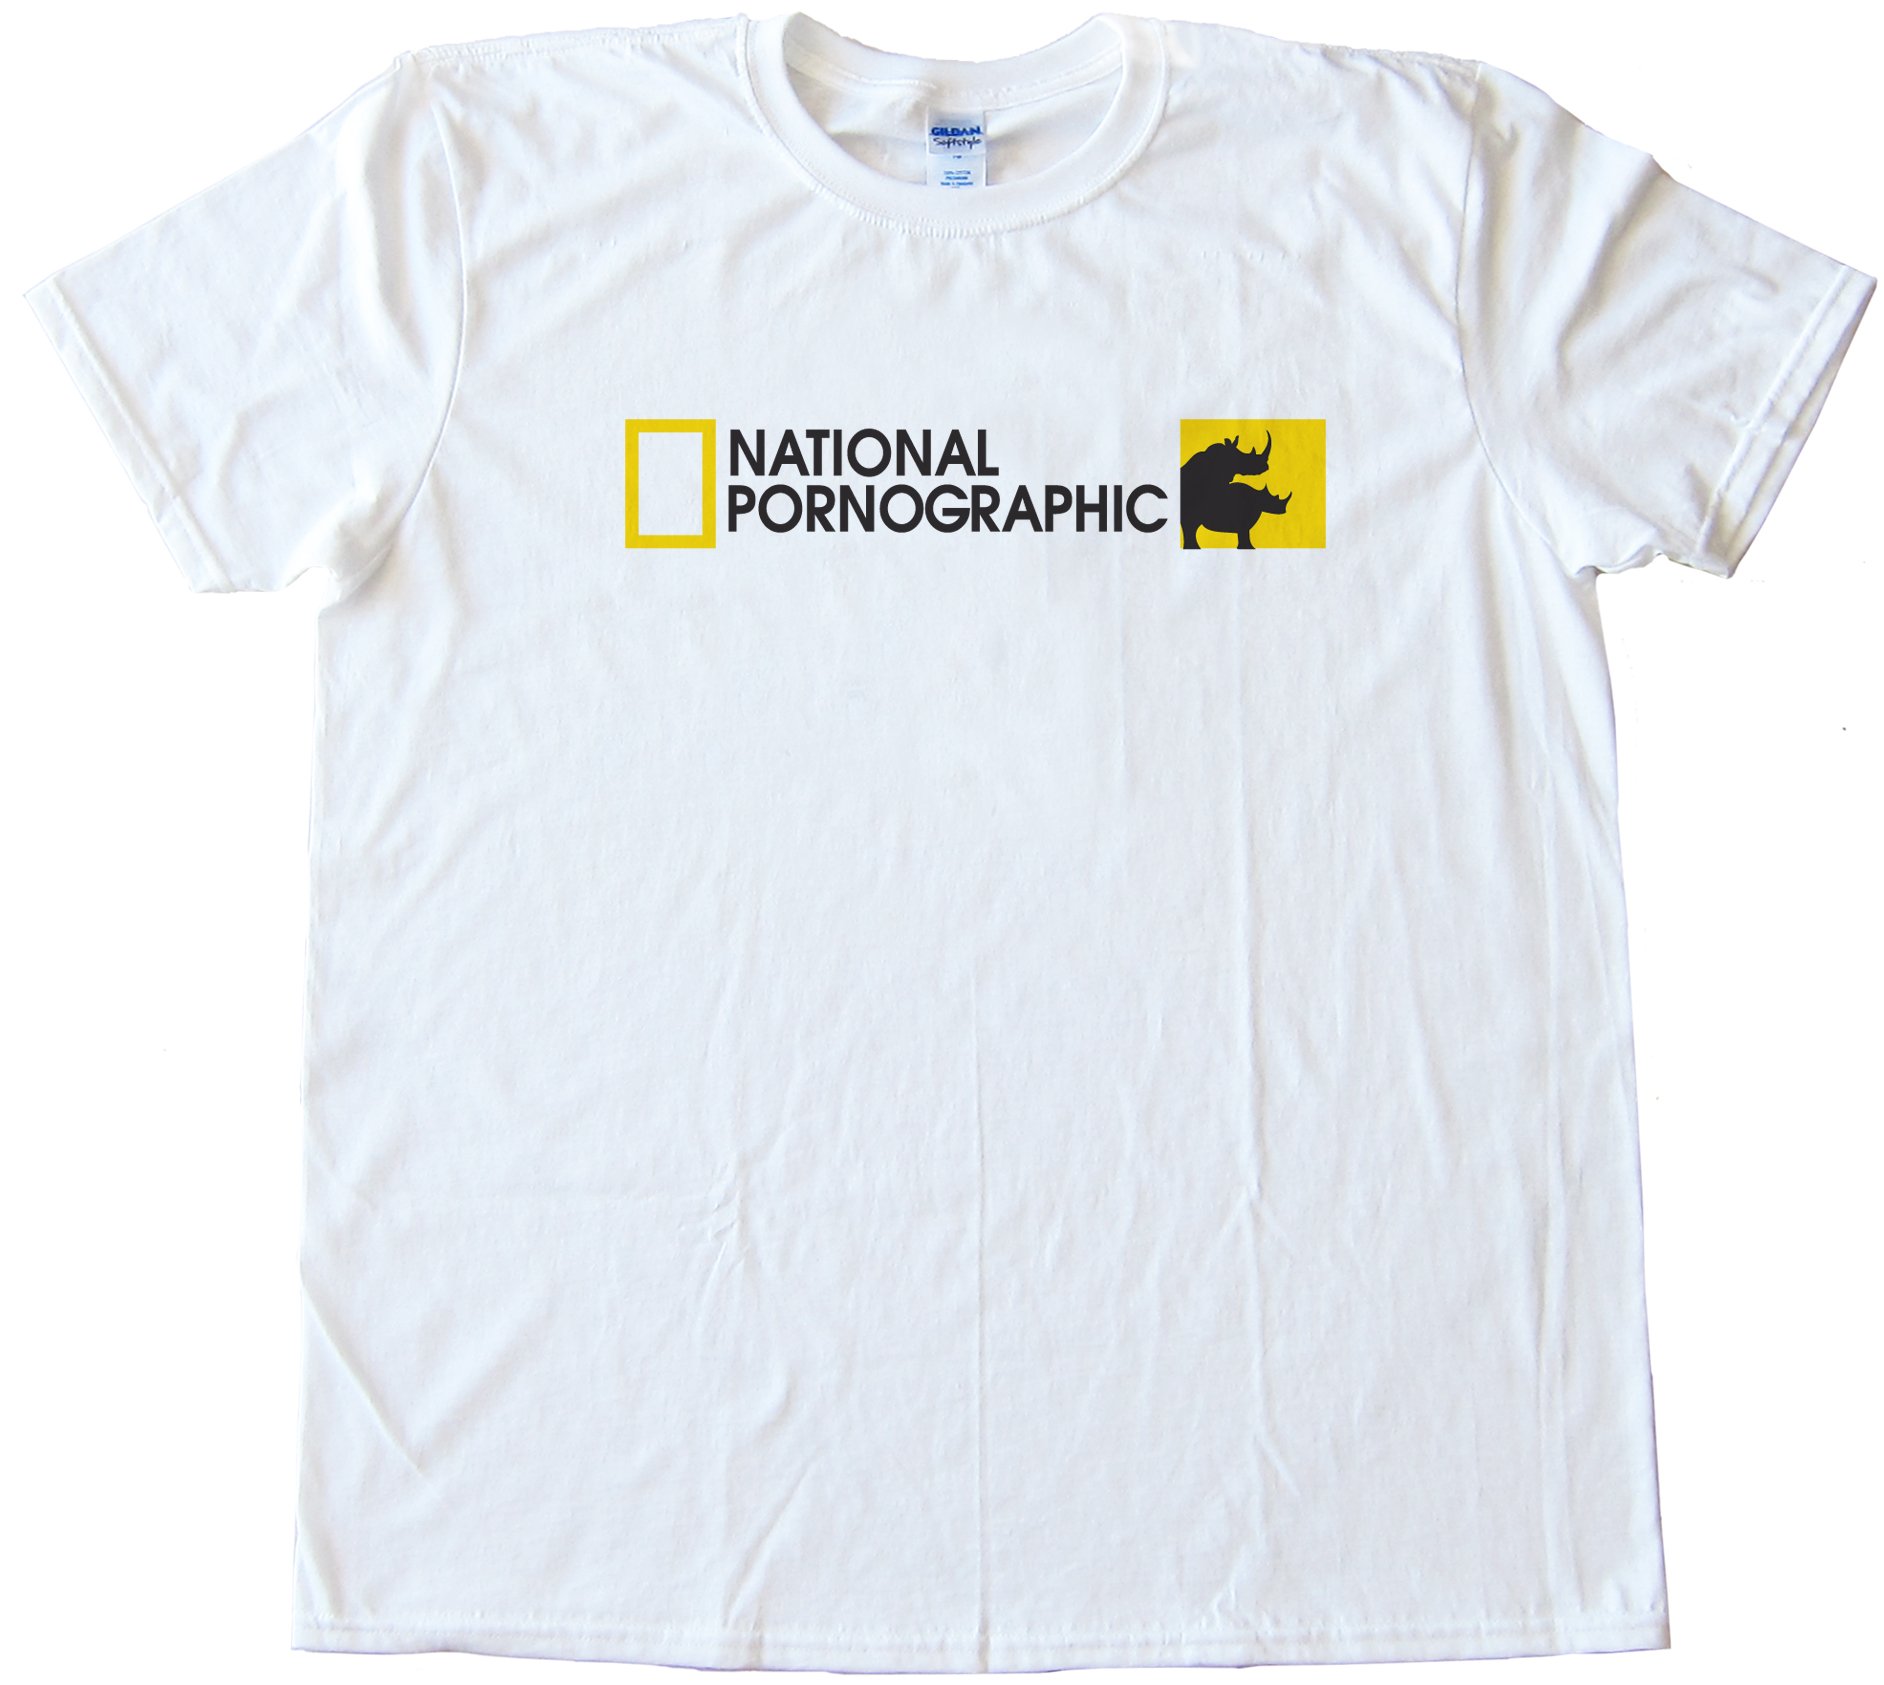 National Pornographic Tee Shirt